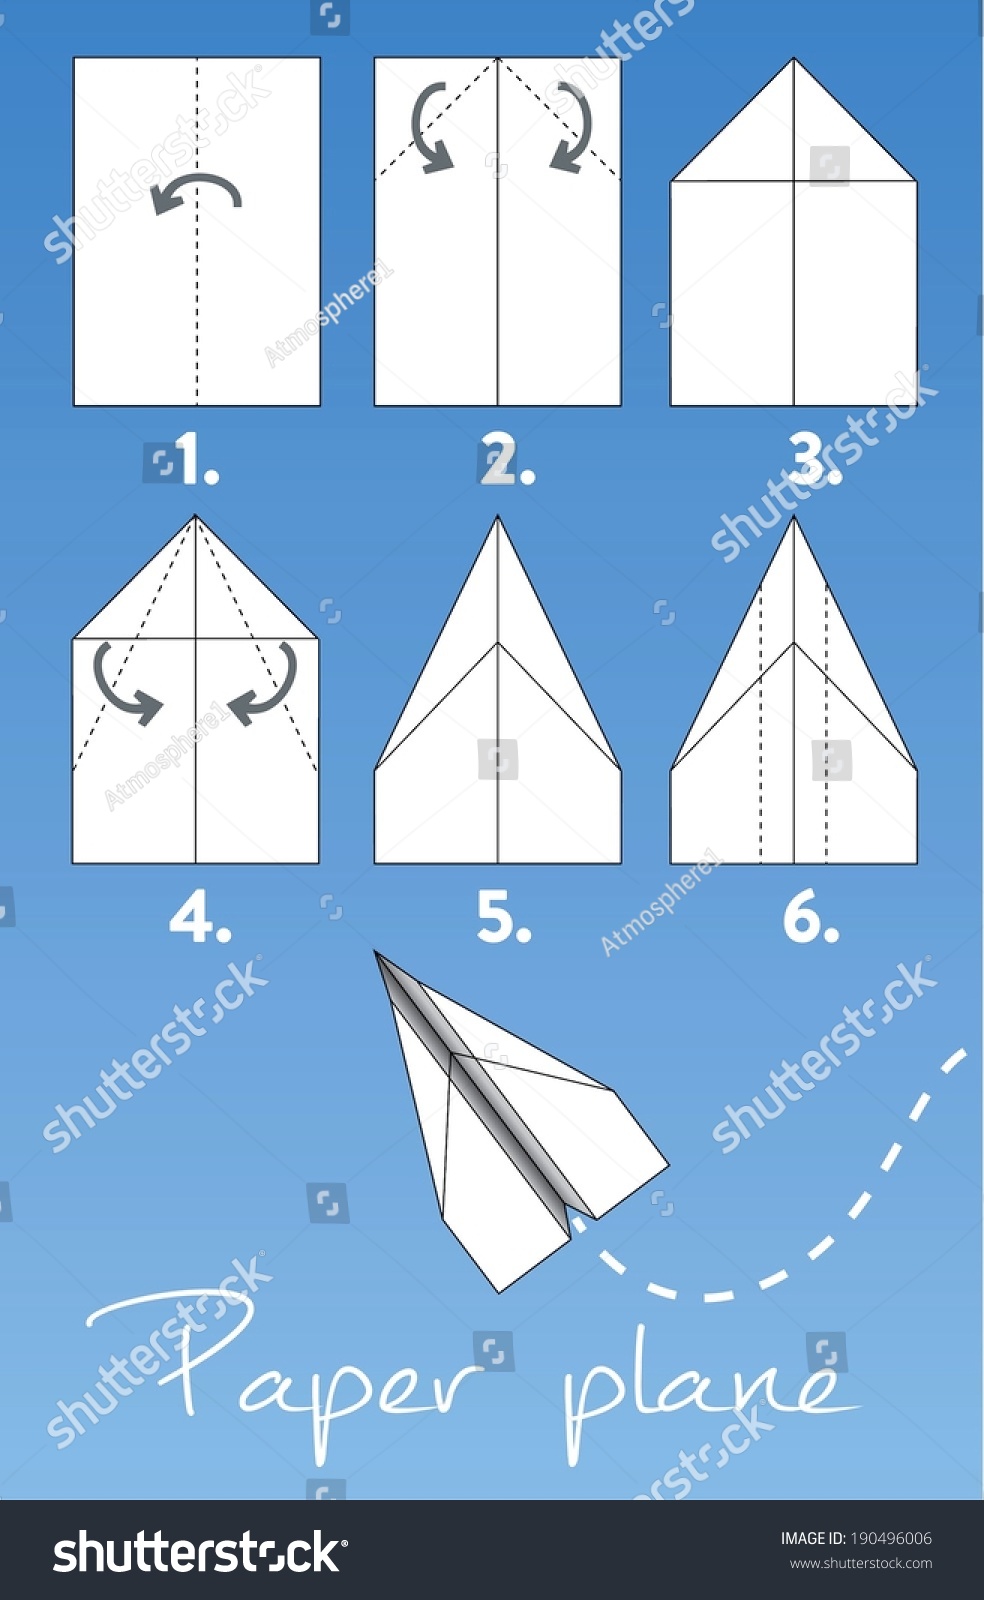 How To Make Origami Airplane Joy Studio Design Gallery Best Design